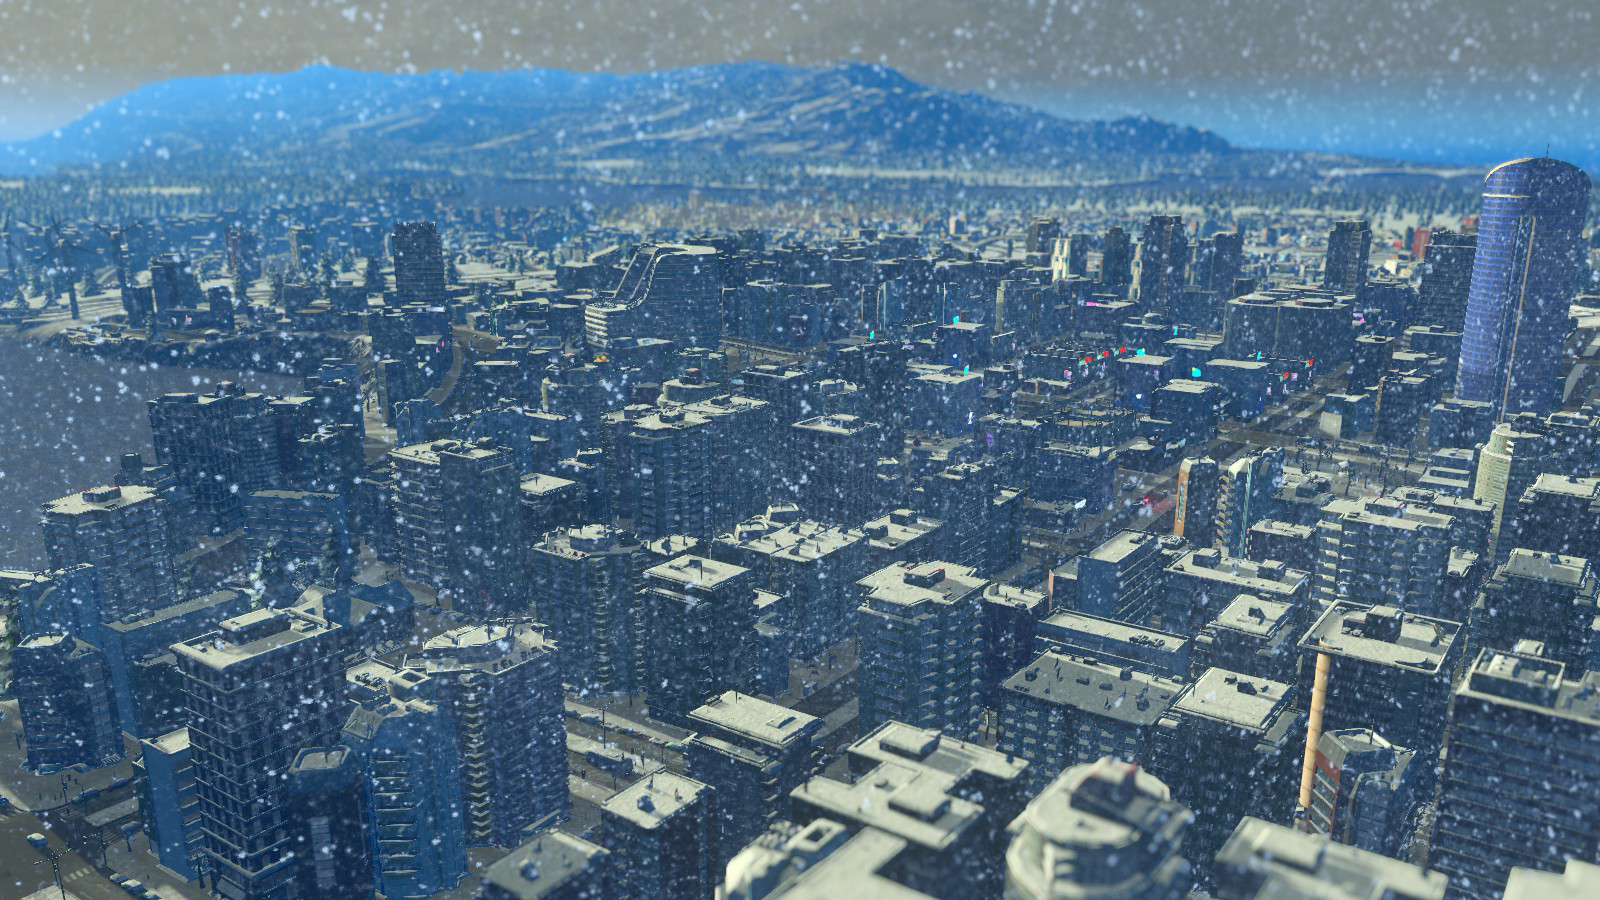 سی دی کی اریجینال استیم Cities: Skylines - Snowfall